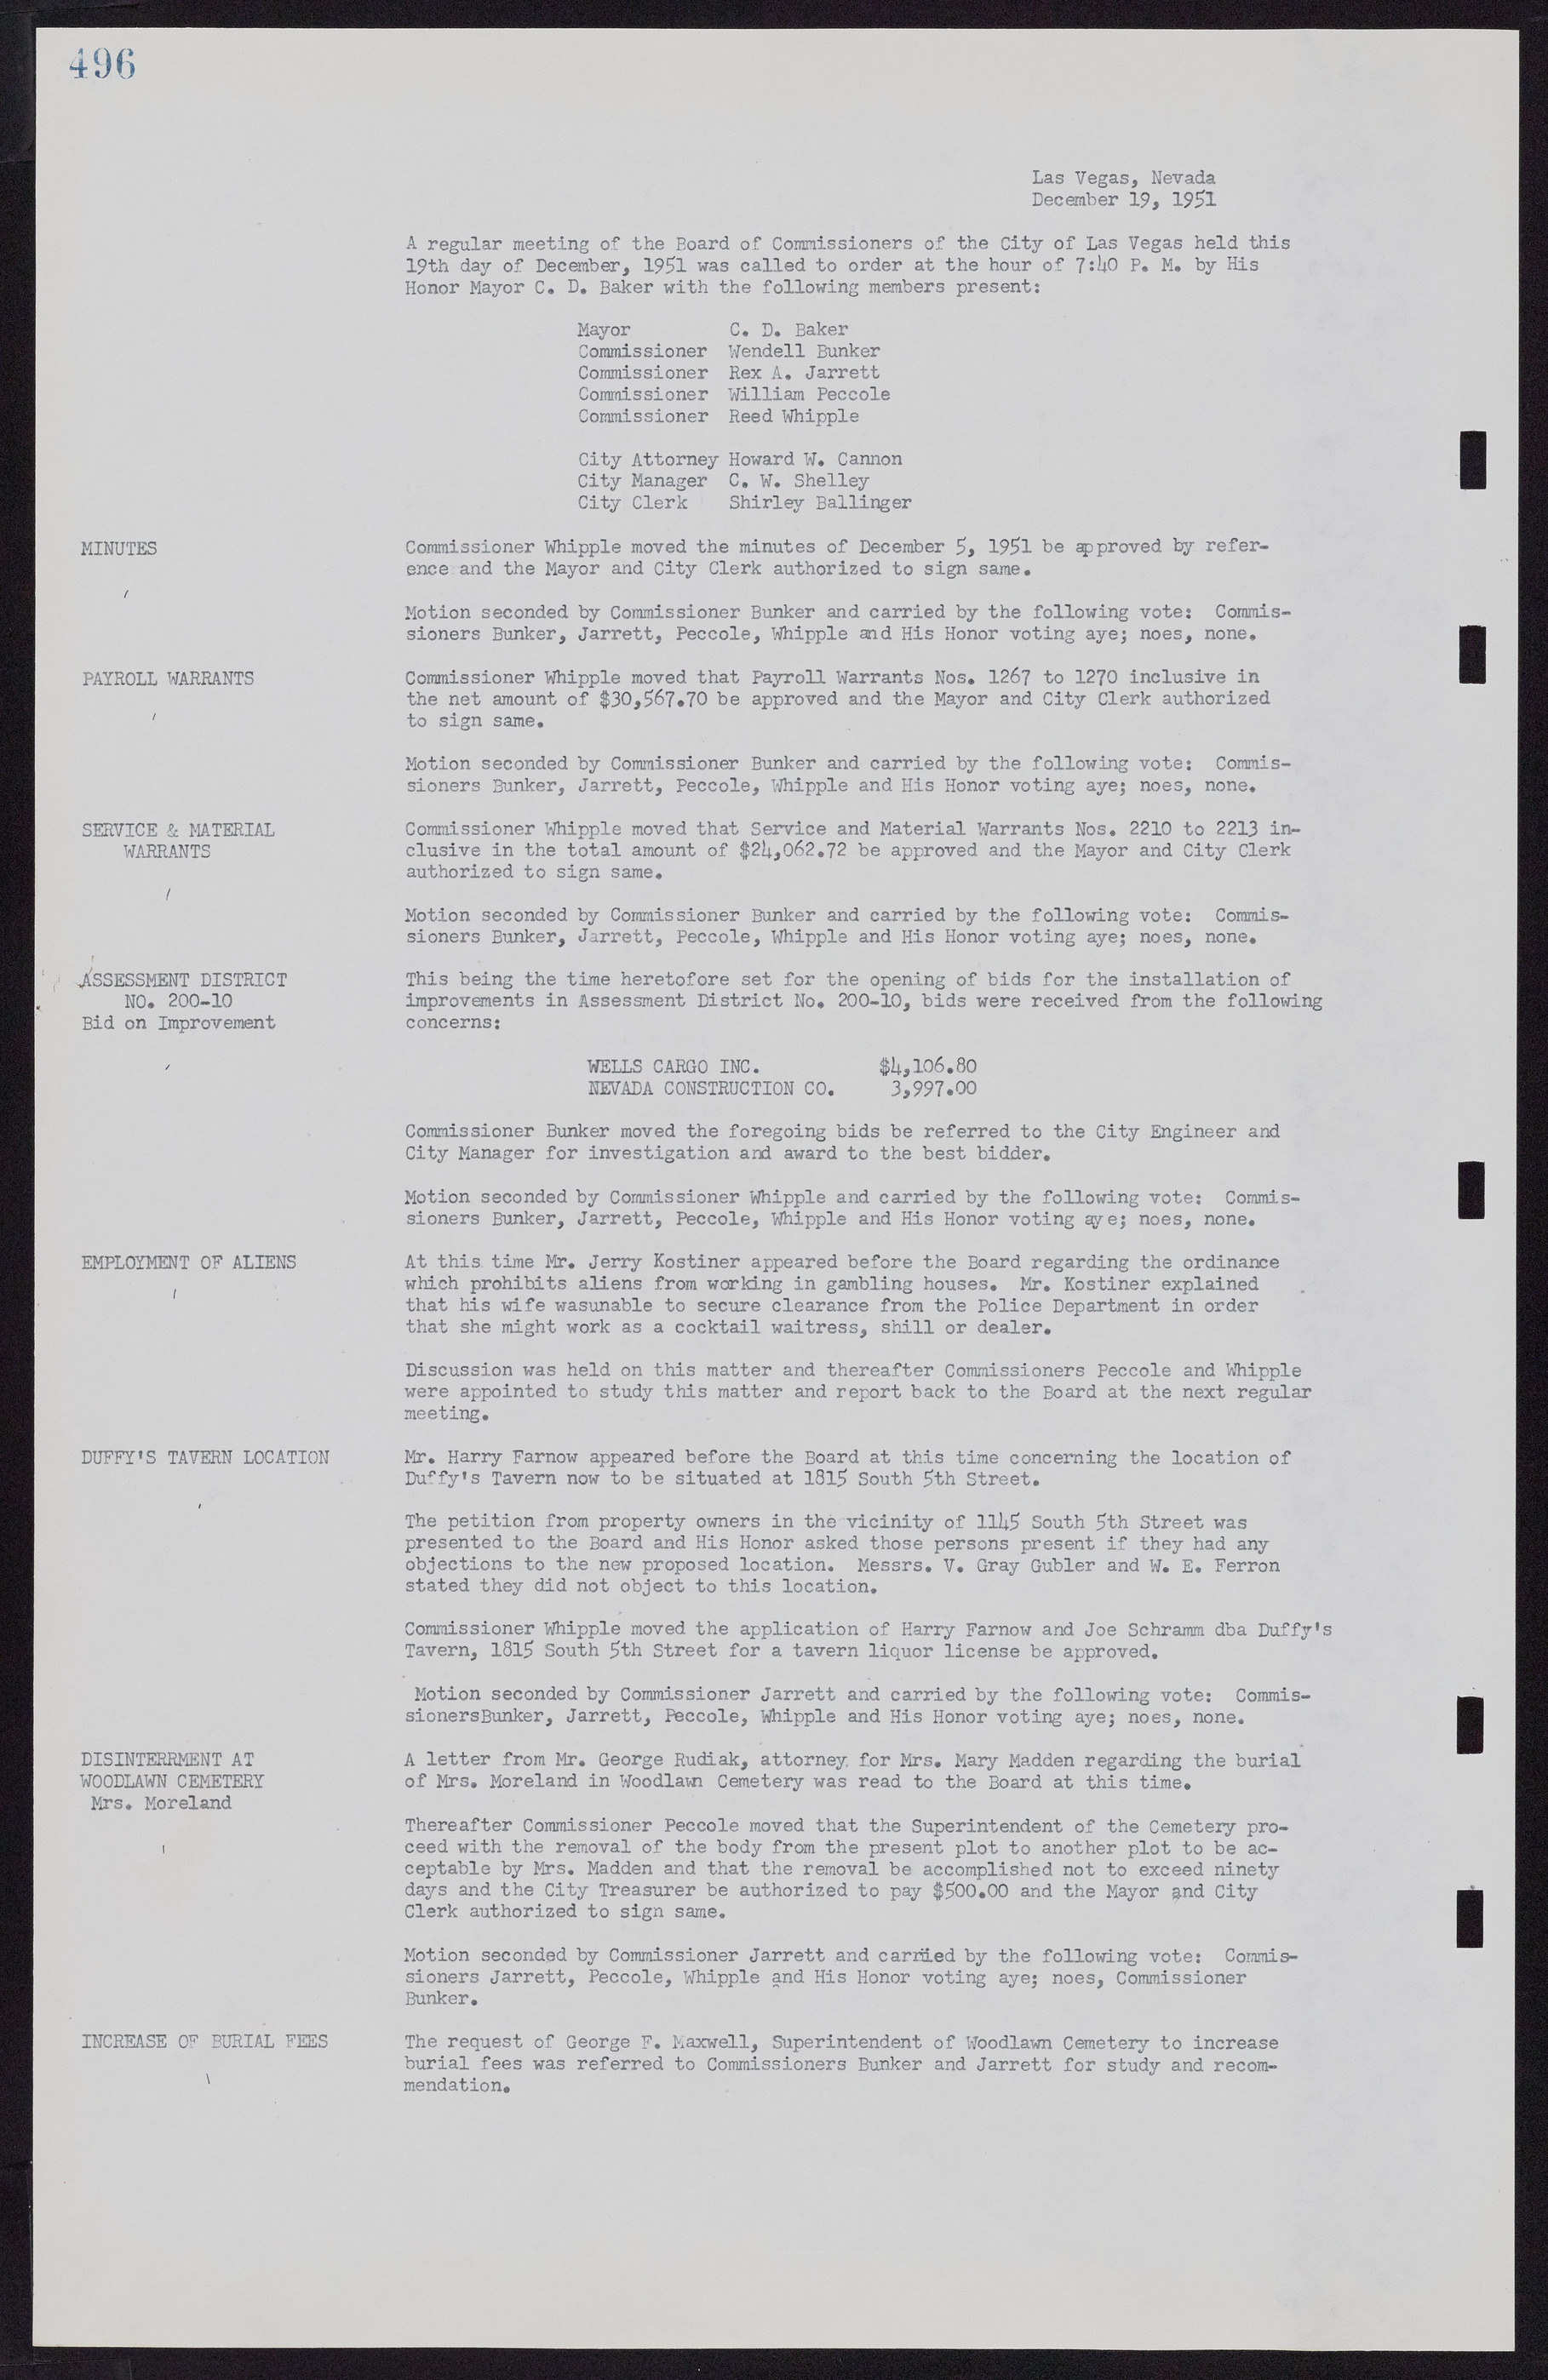 Las Vegas City Commission Minutes, November 7, 1949 to May 21, 1952, lvc000007-512